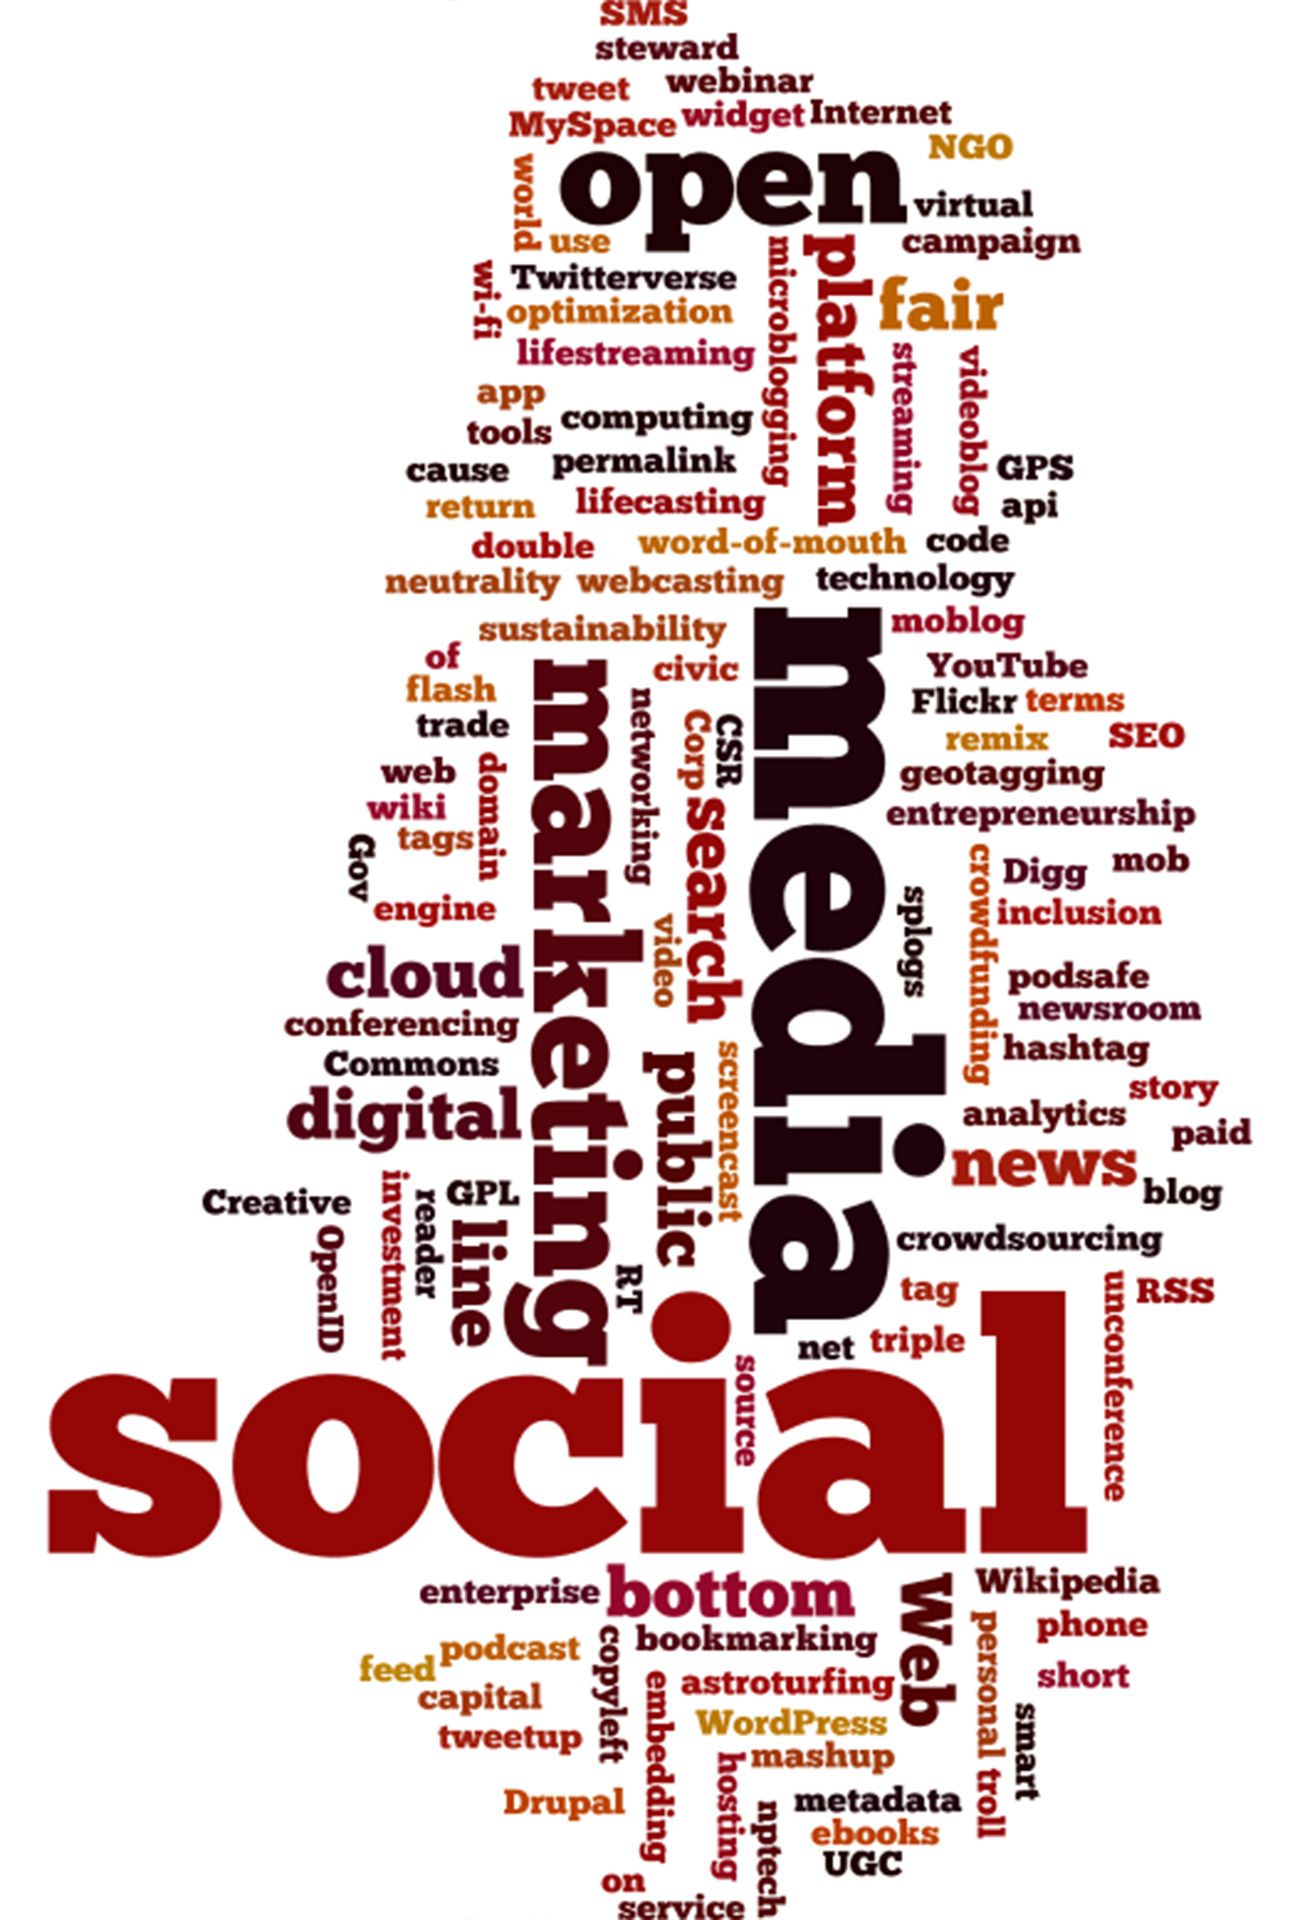 Online Marketing and Social Media 1